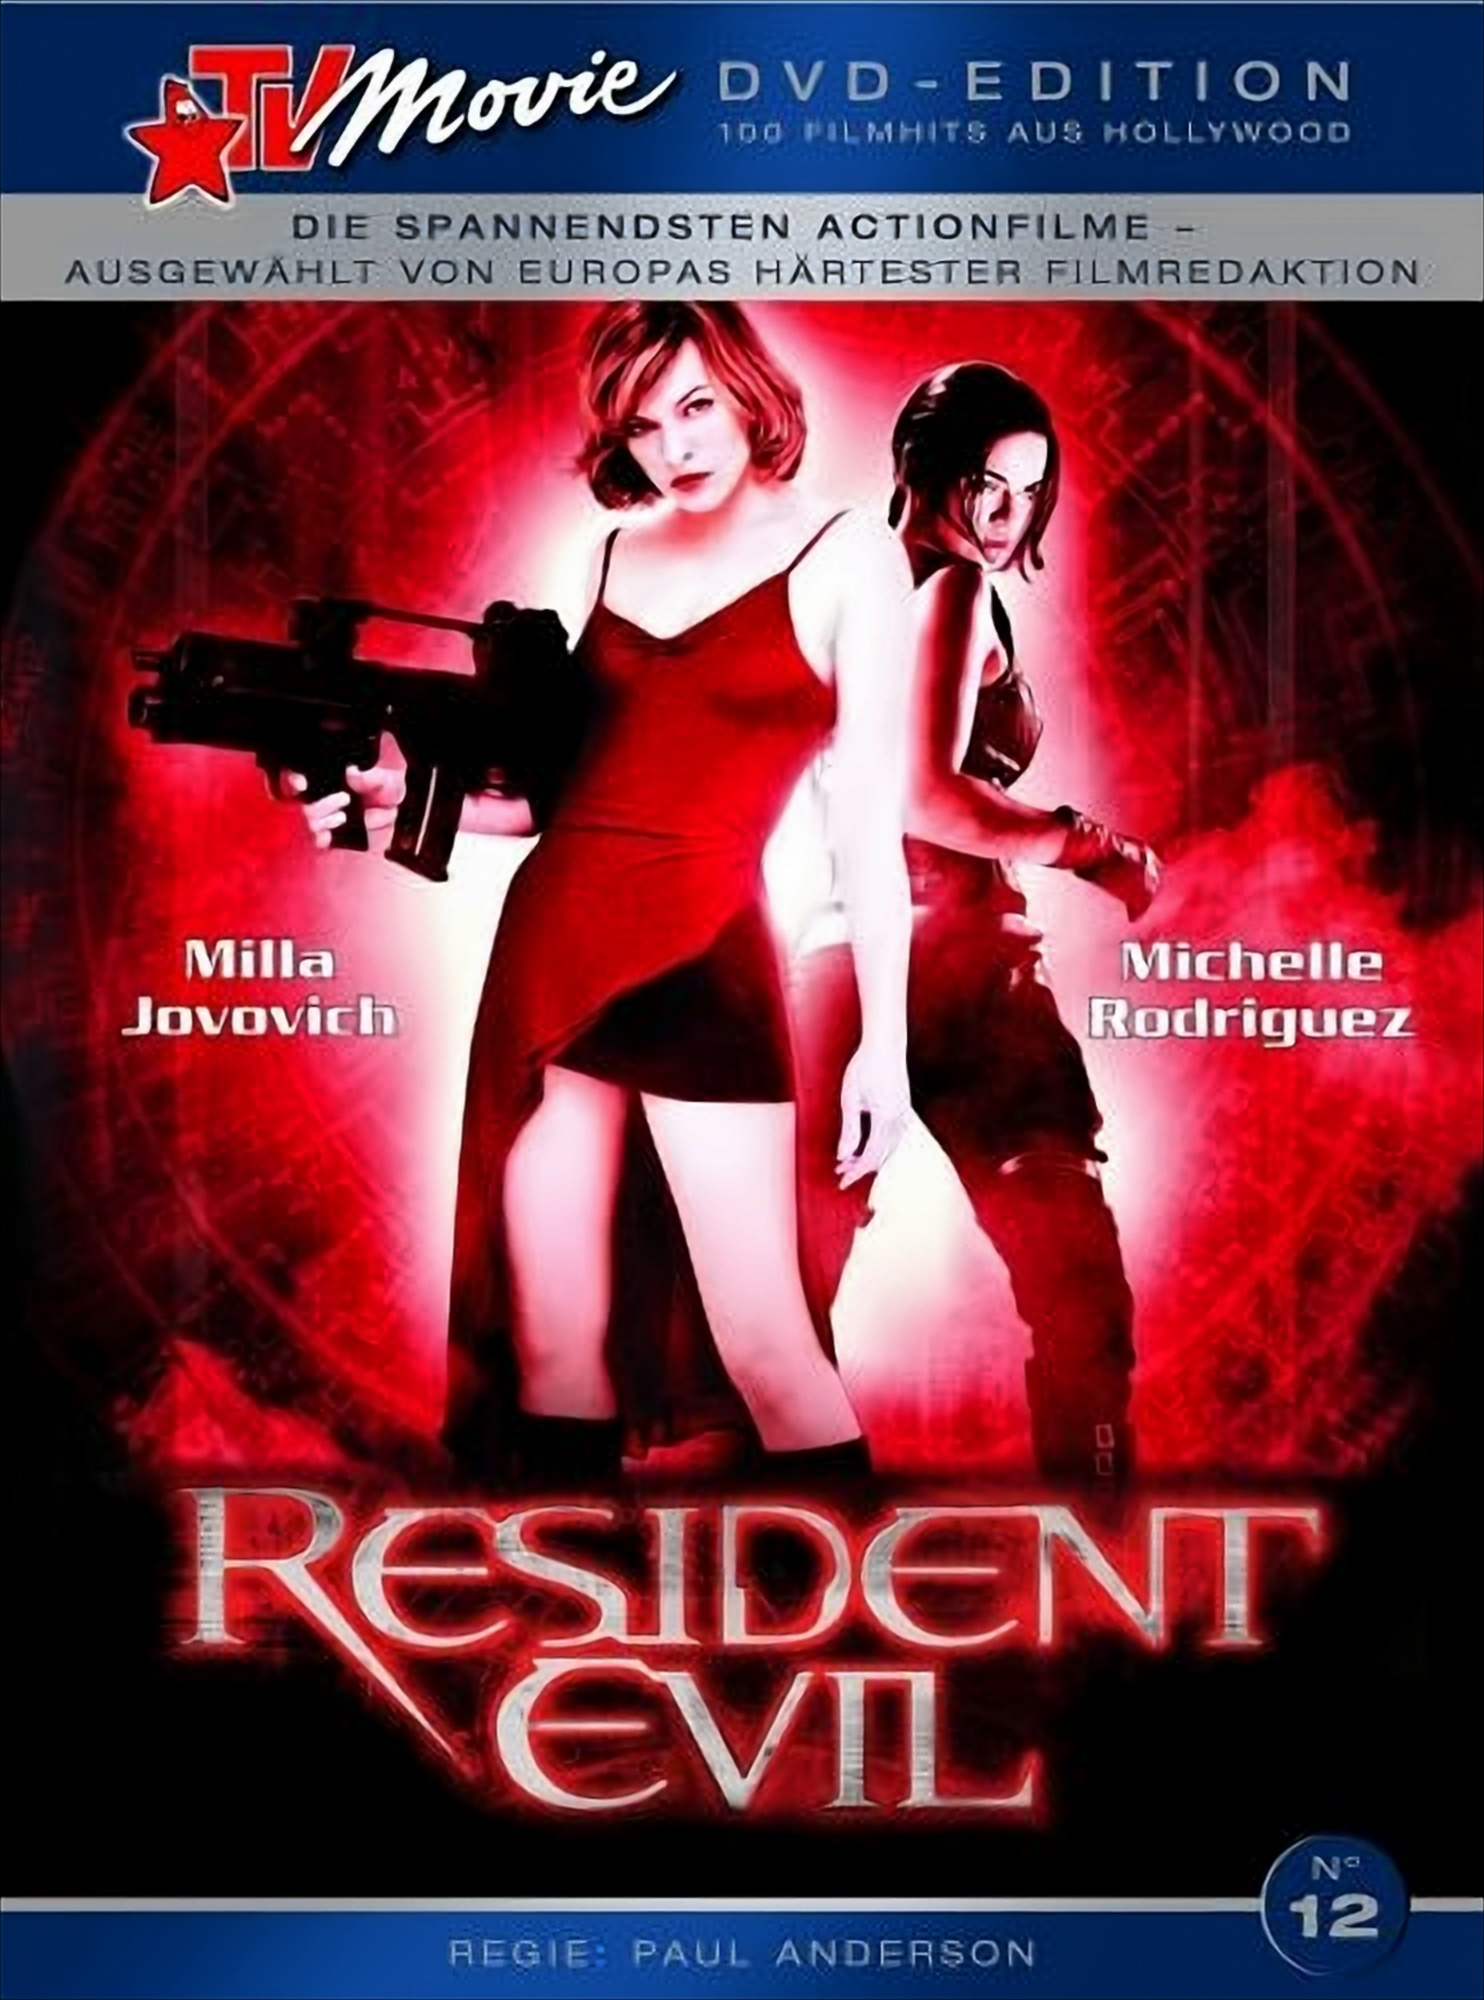 Edition Evil Movie Resident DVD TV -